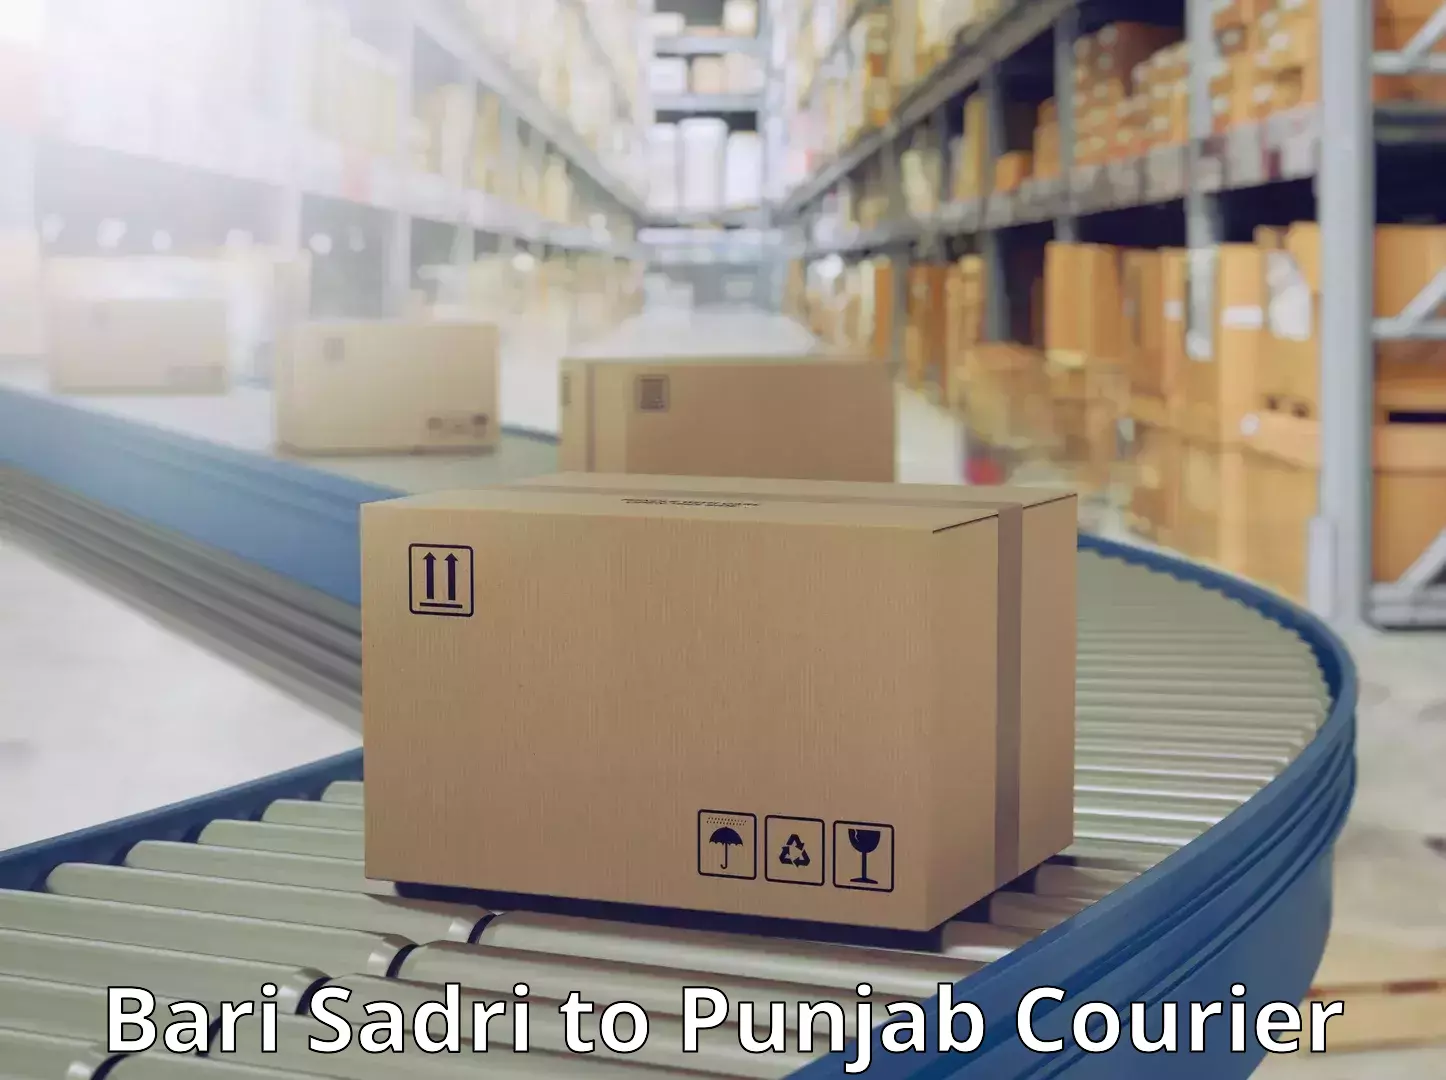 Advanced tracking systems Bari Sadri to Punjab